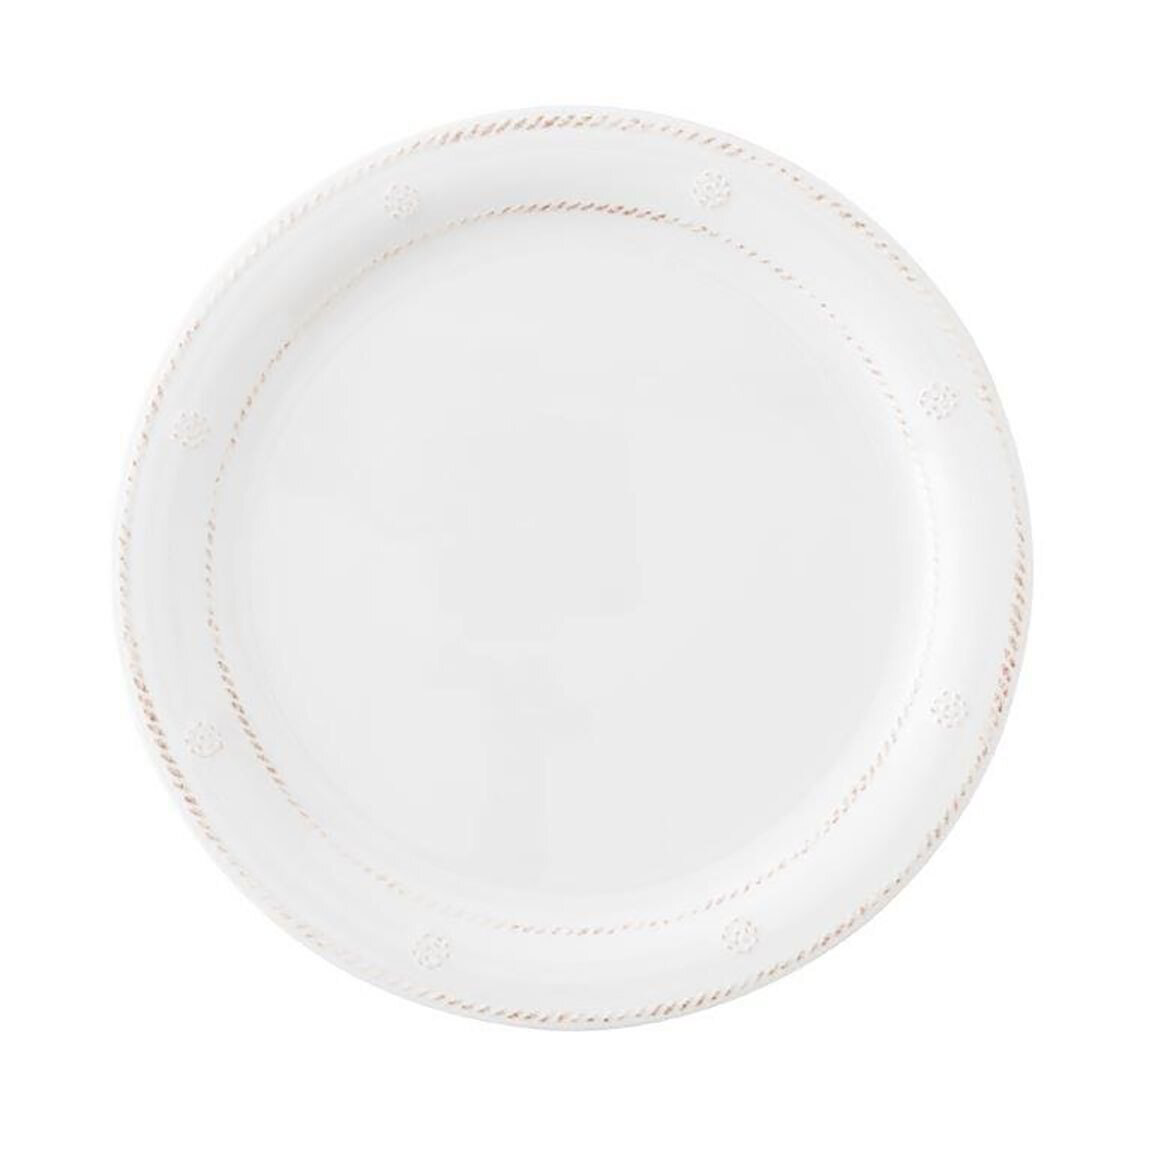 Juliska Berry & Thread Whitewash Melamine Dinner Plate MA01/100